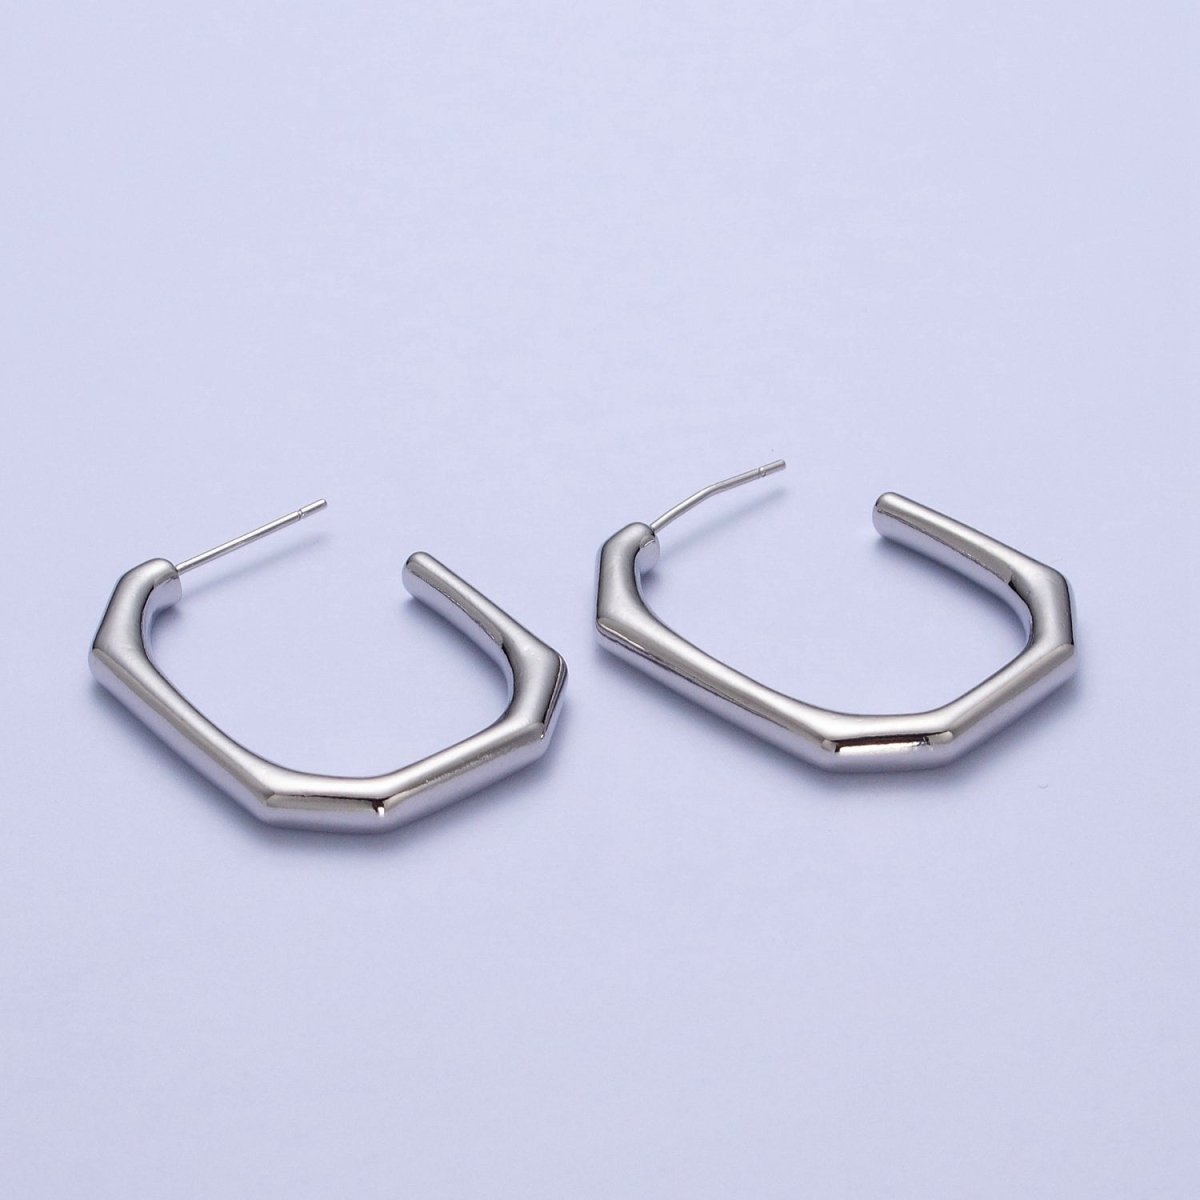 Modern Minimalist Geometric Hexagonal Post Studs J Shaped Hoops Earrings in Gold & Silver | AE1097 AE1098 - DLUXCA